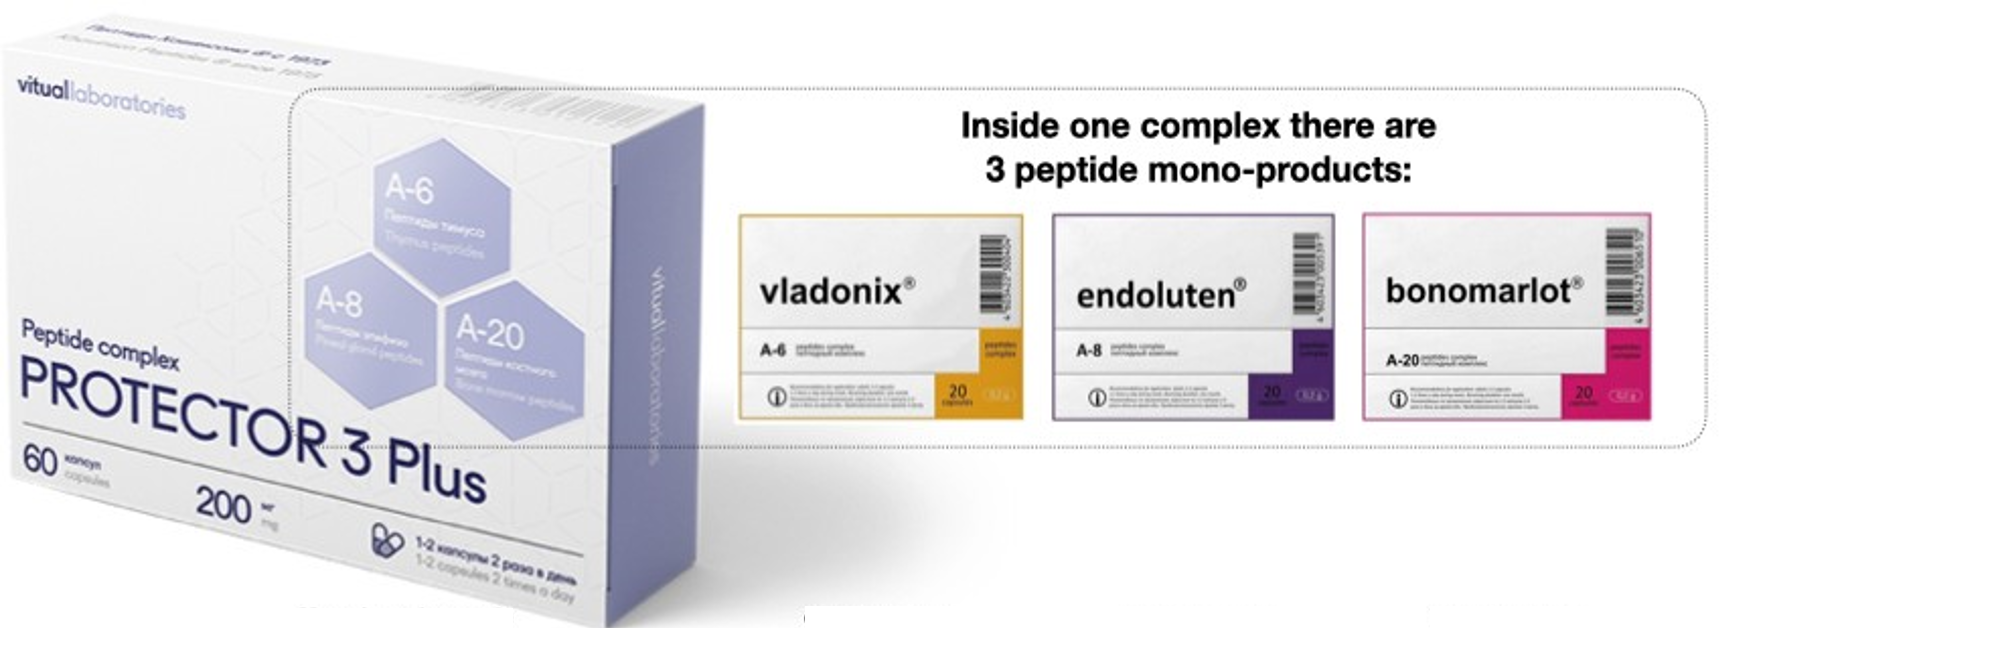 Peptide Complex Protector 3 Plus